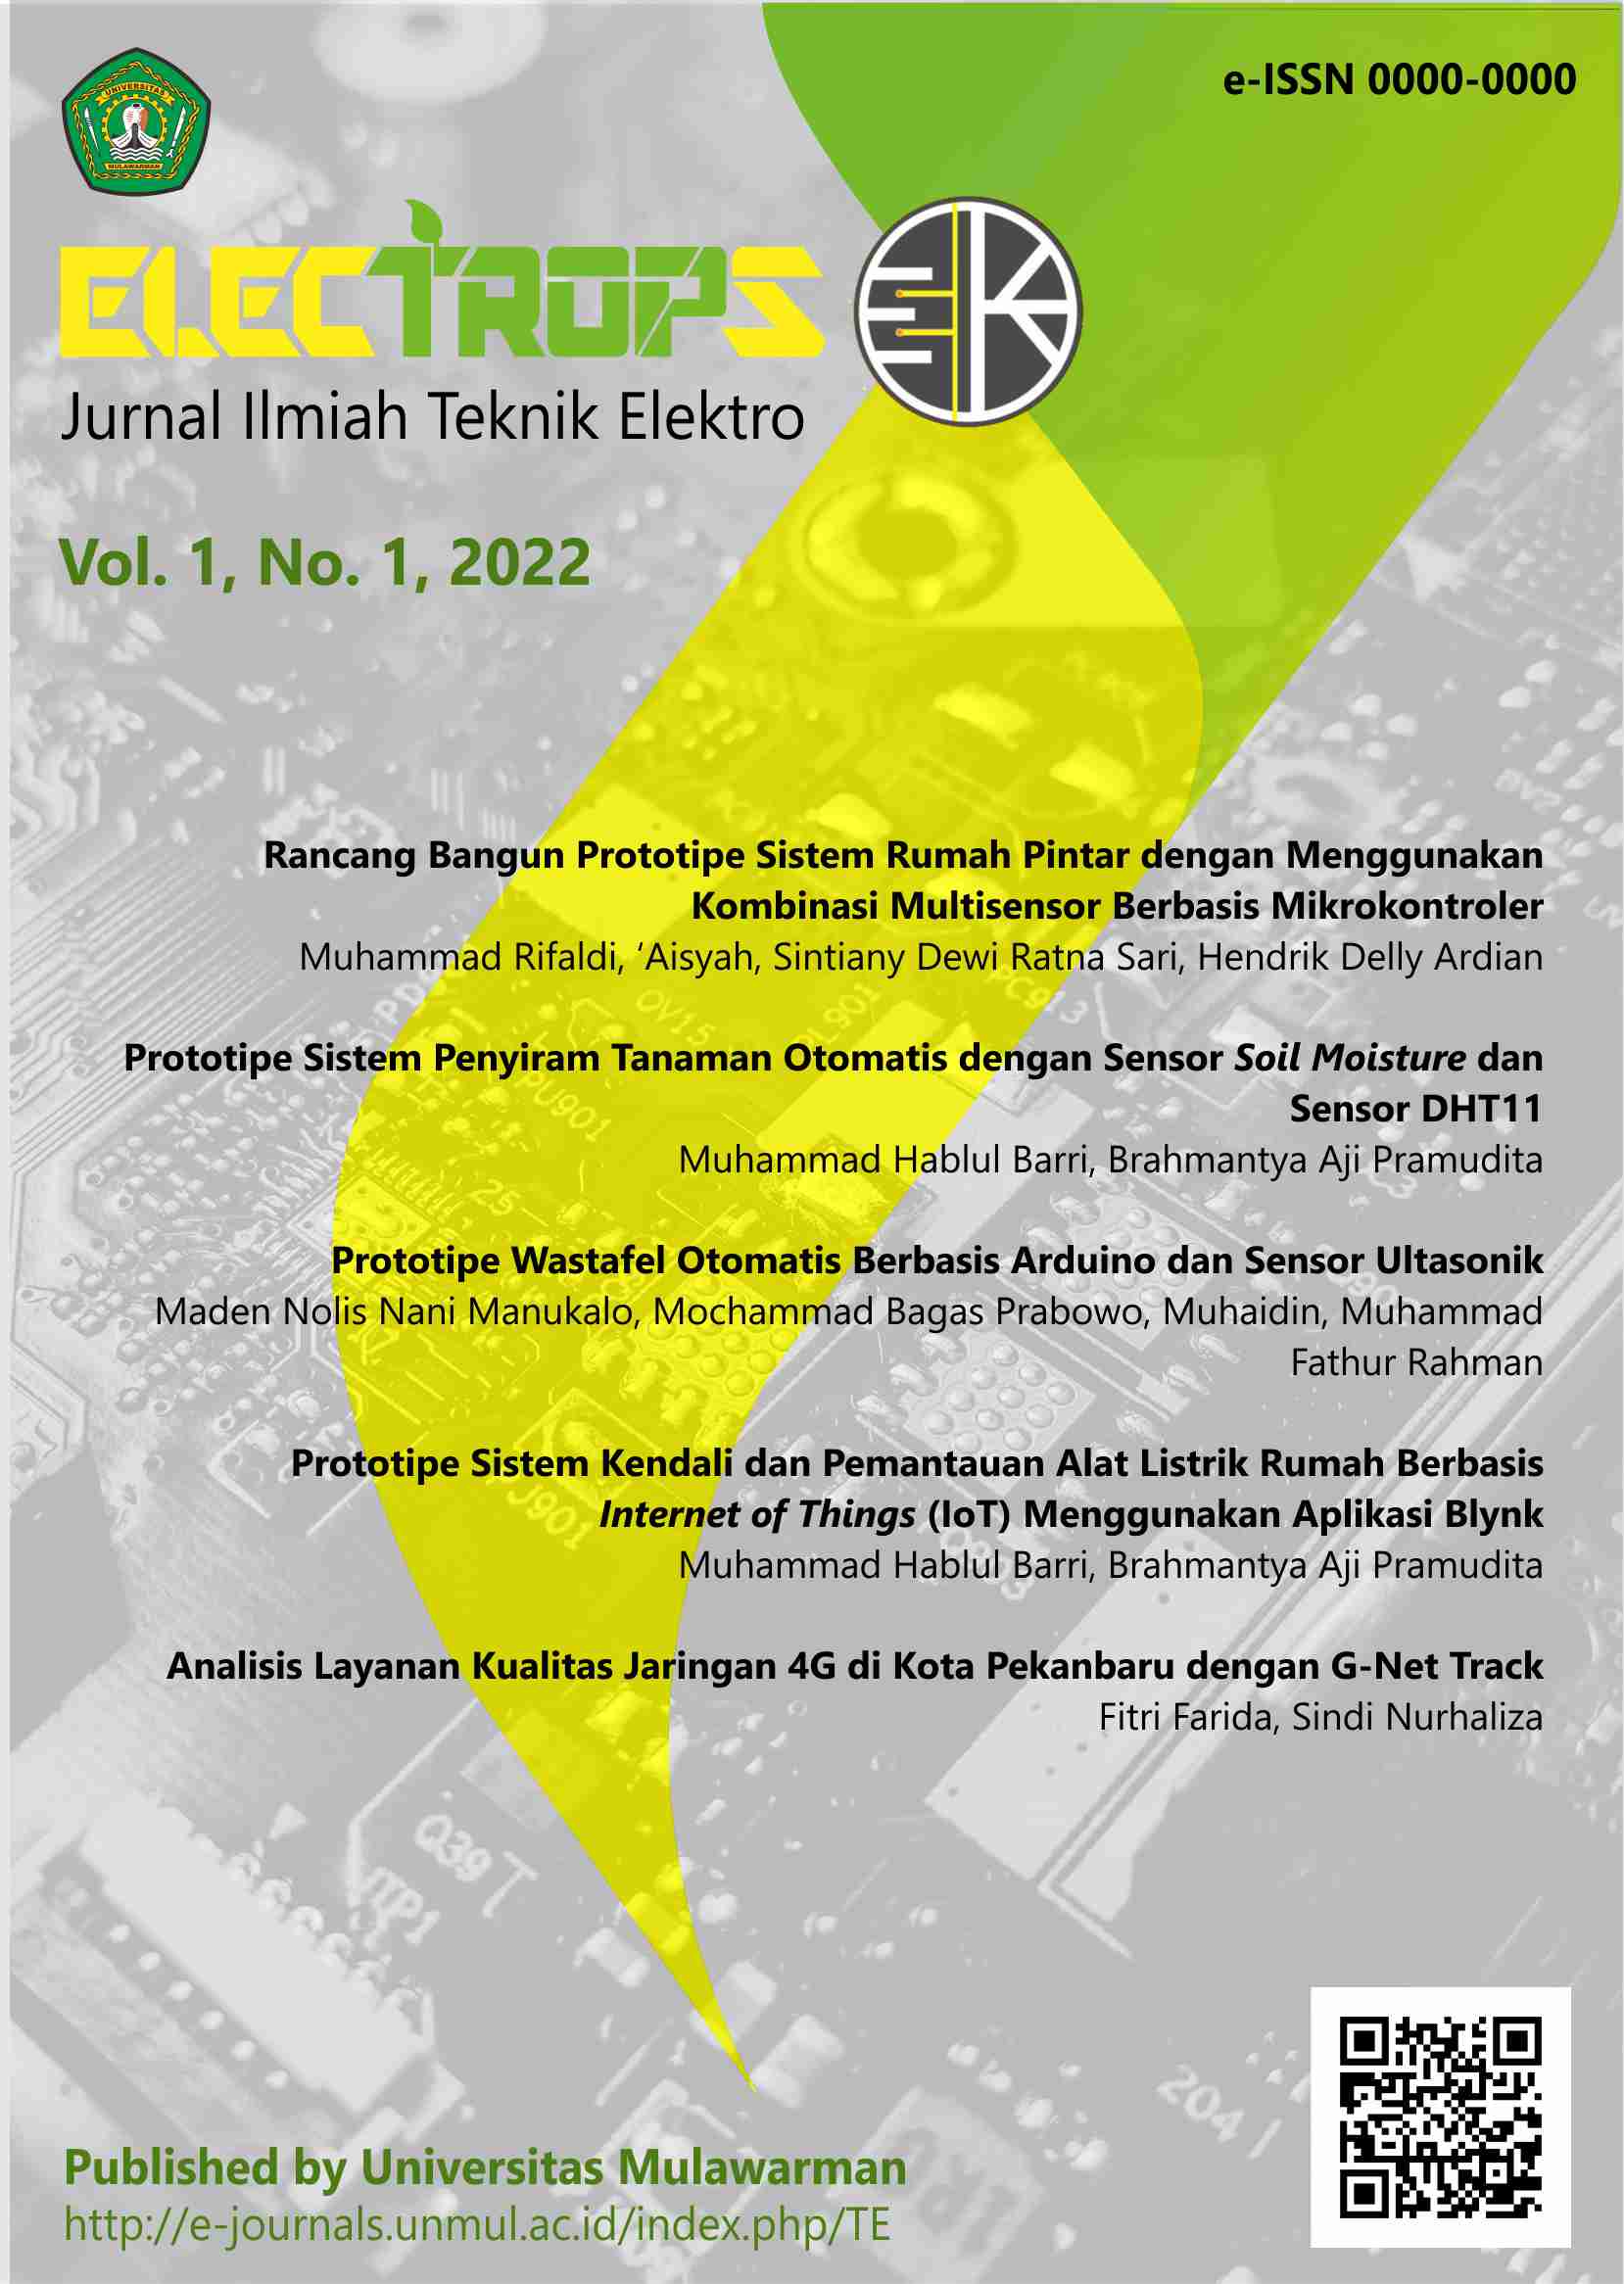 ELECTROPS : Jurnal Ilmiah Teknik Elektro, Vol. 1, No. 1, Dec. 2022.